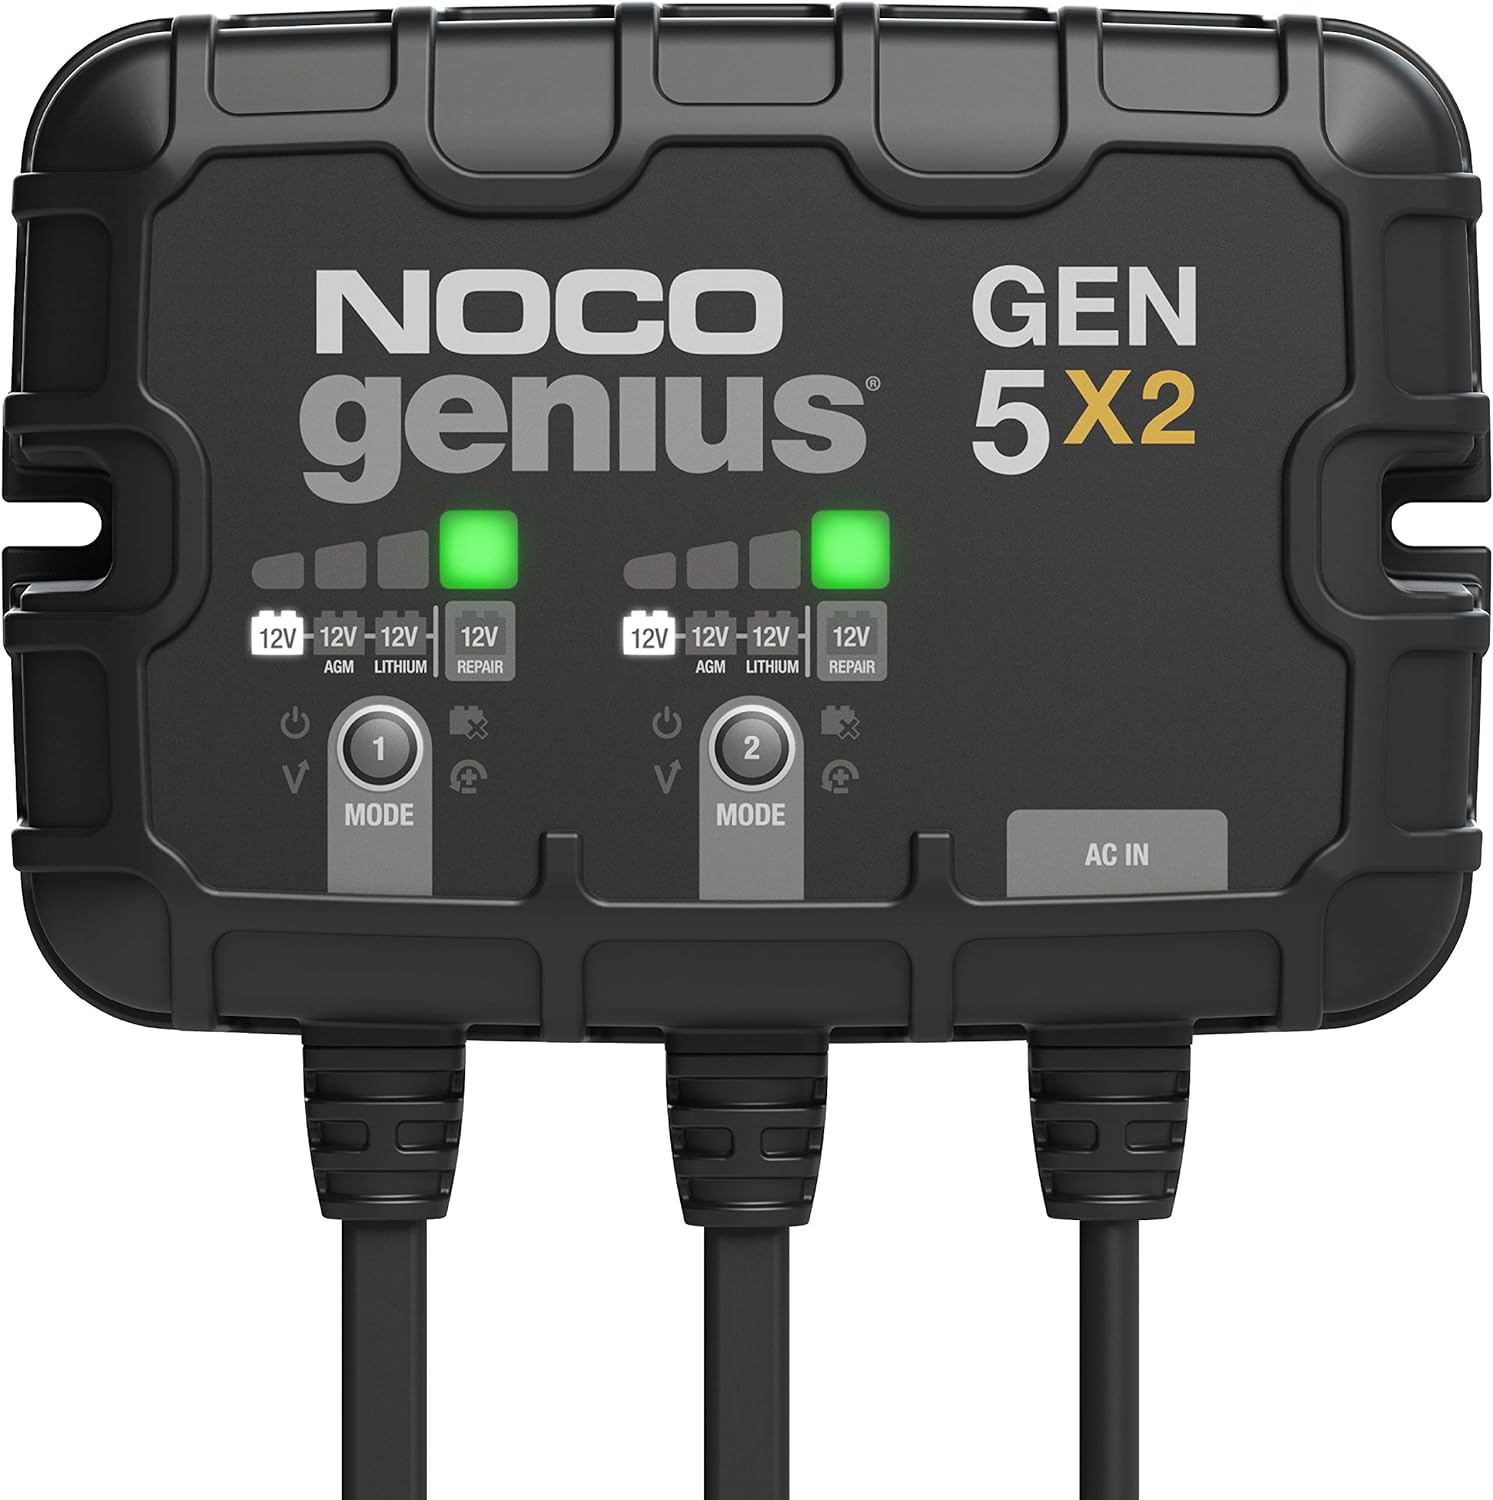 NOCO Genius GEN5X2 Review